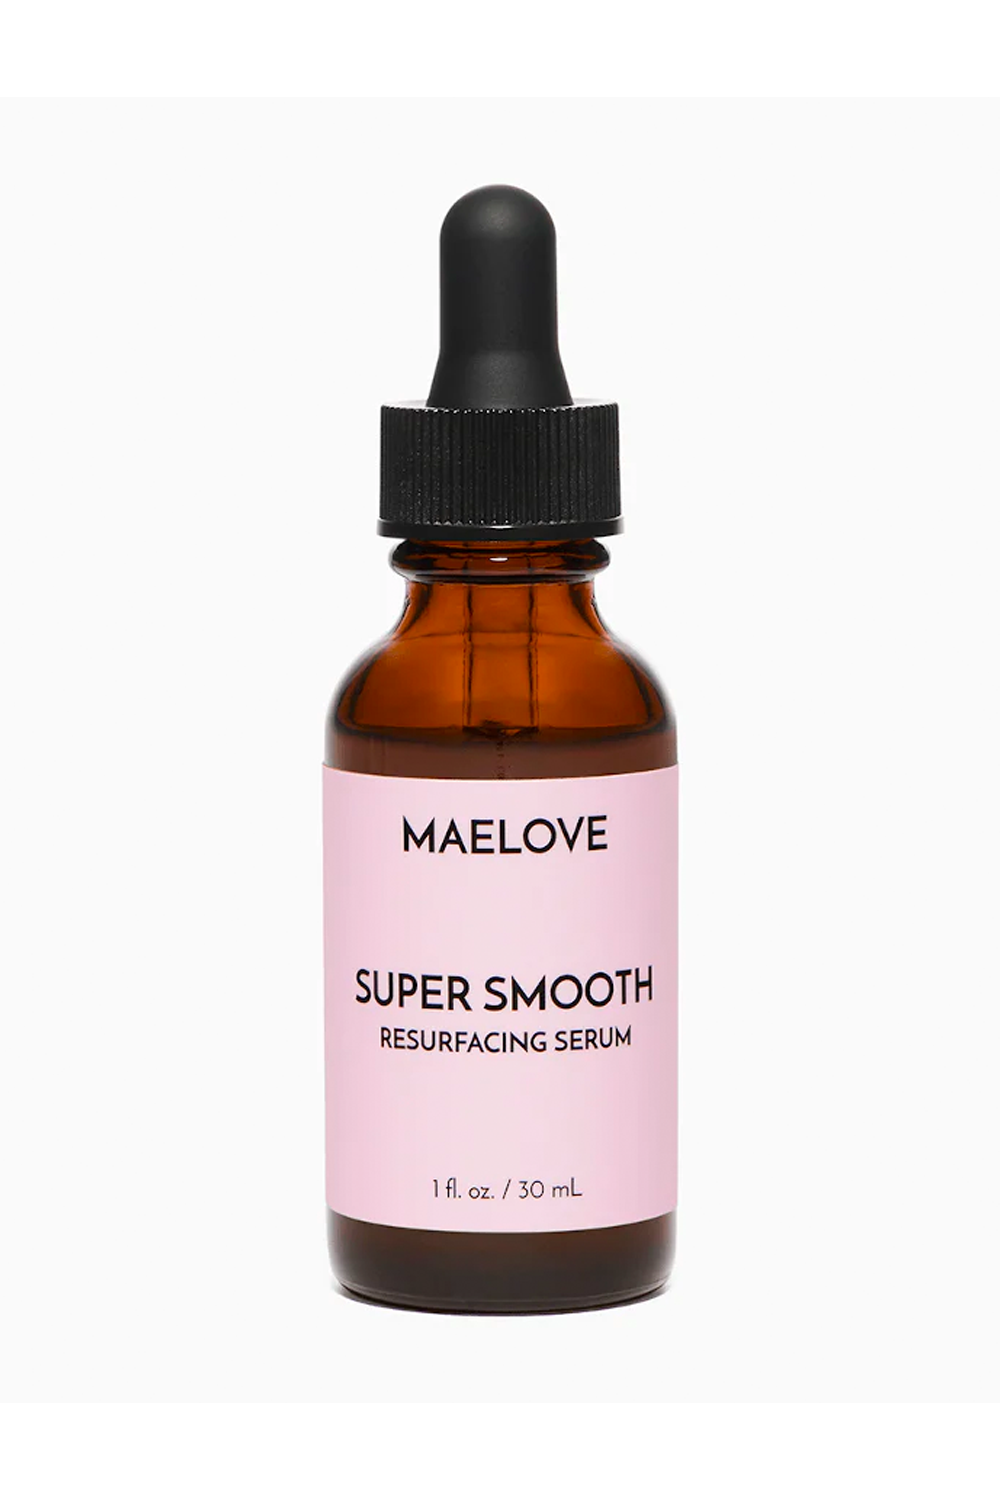 Maelove Super Smooth Resurfacing Serum